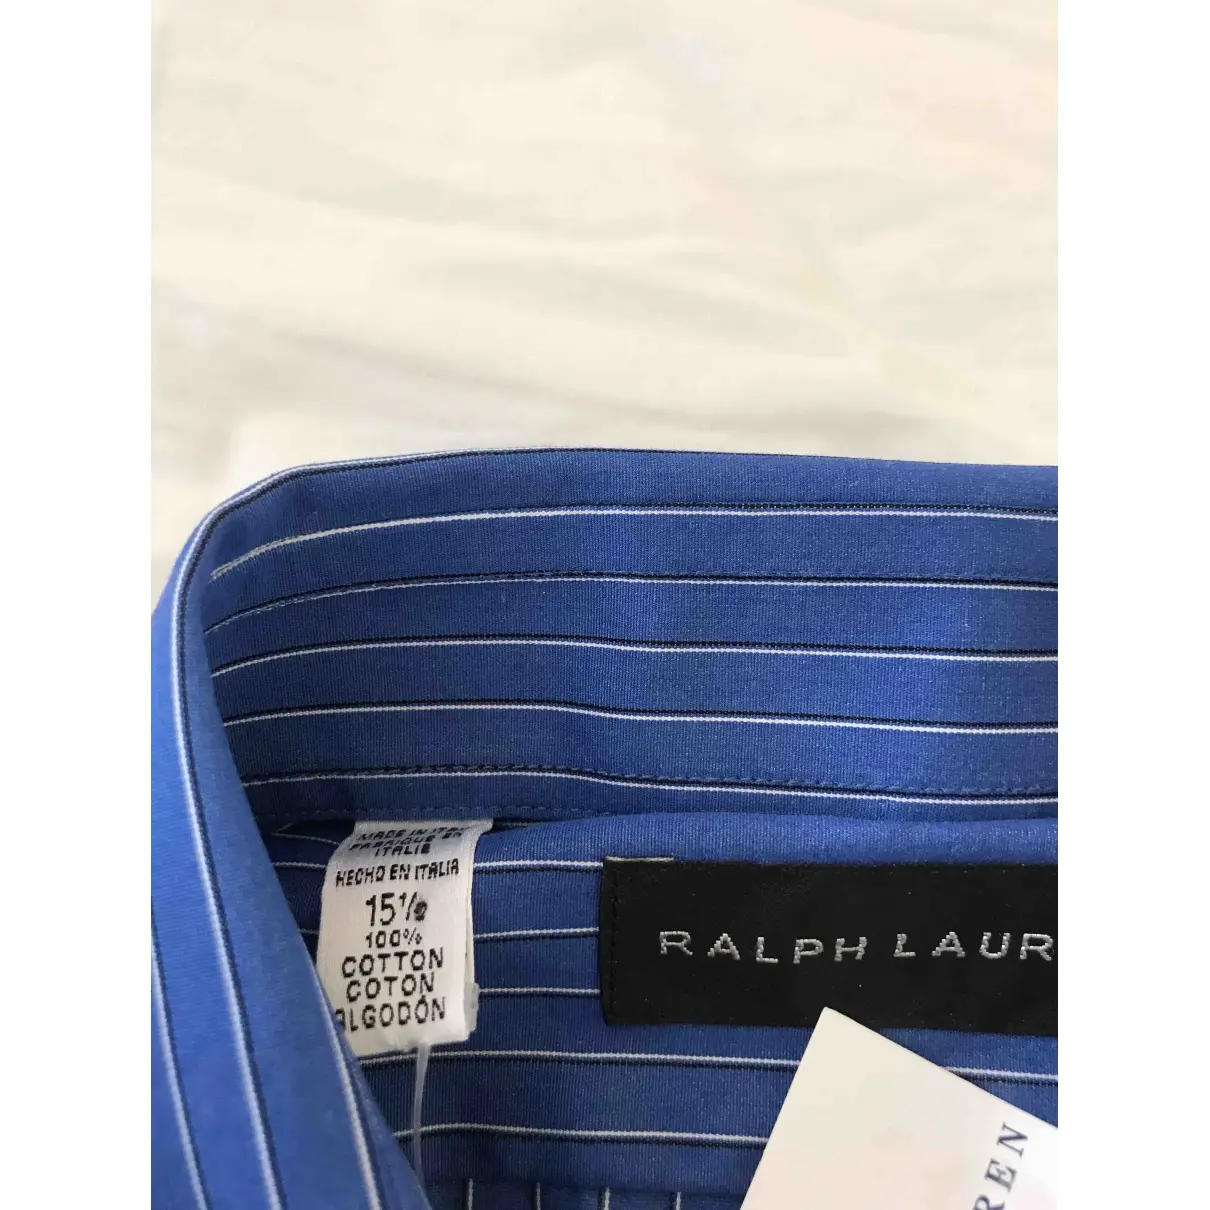 Ralph Lauren Collection Shirt for sale